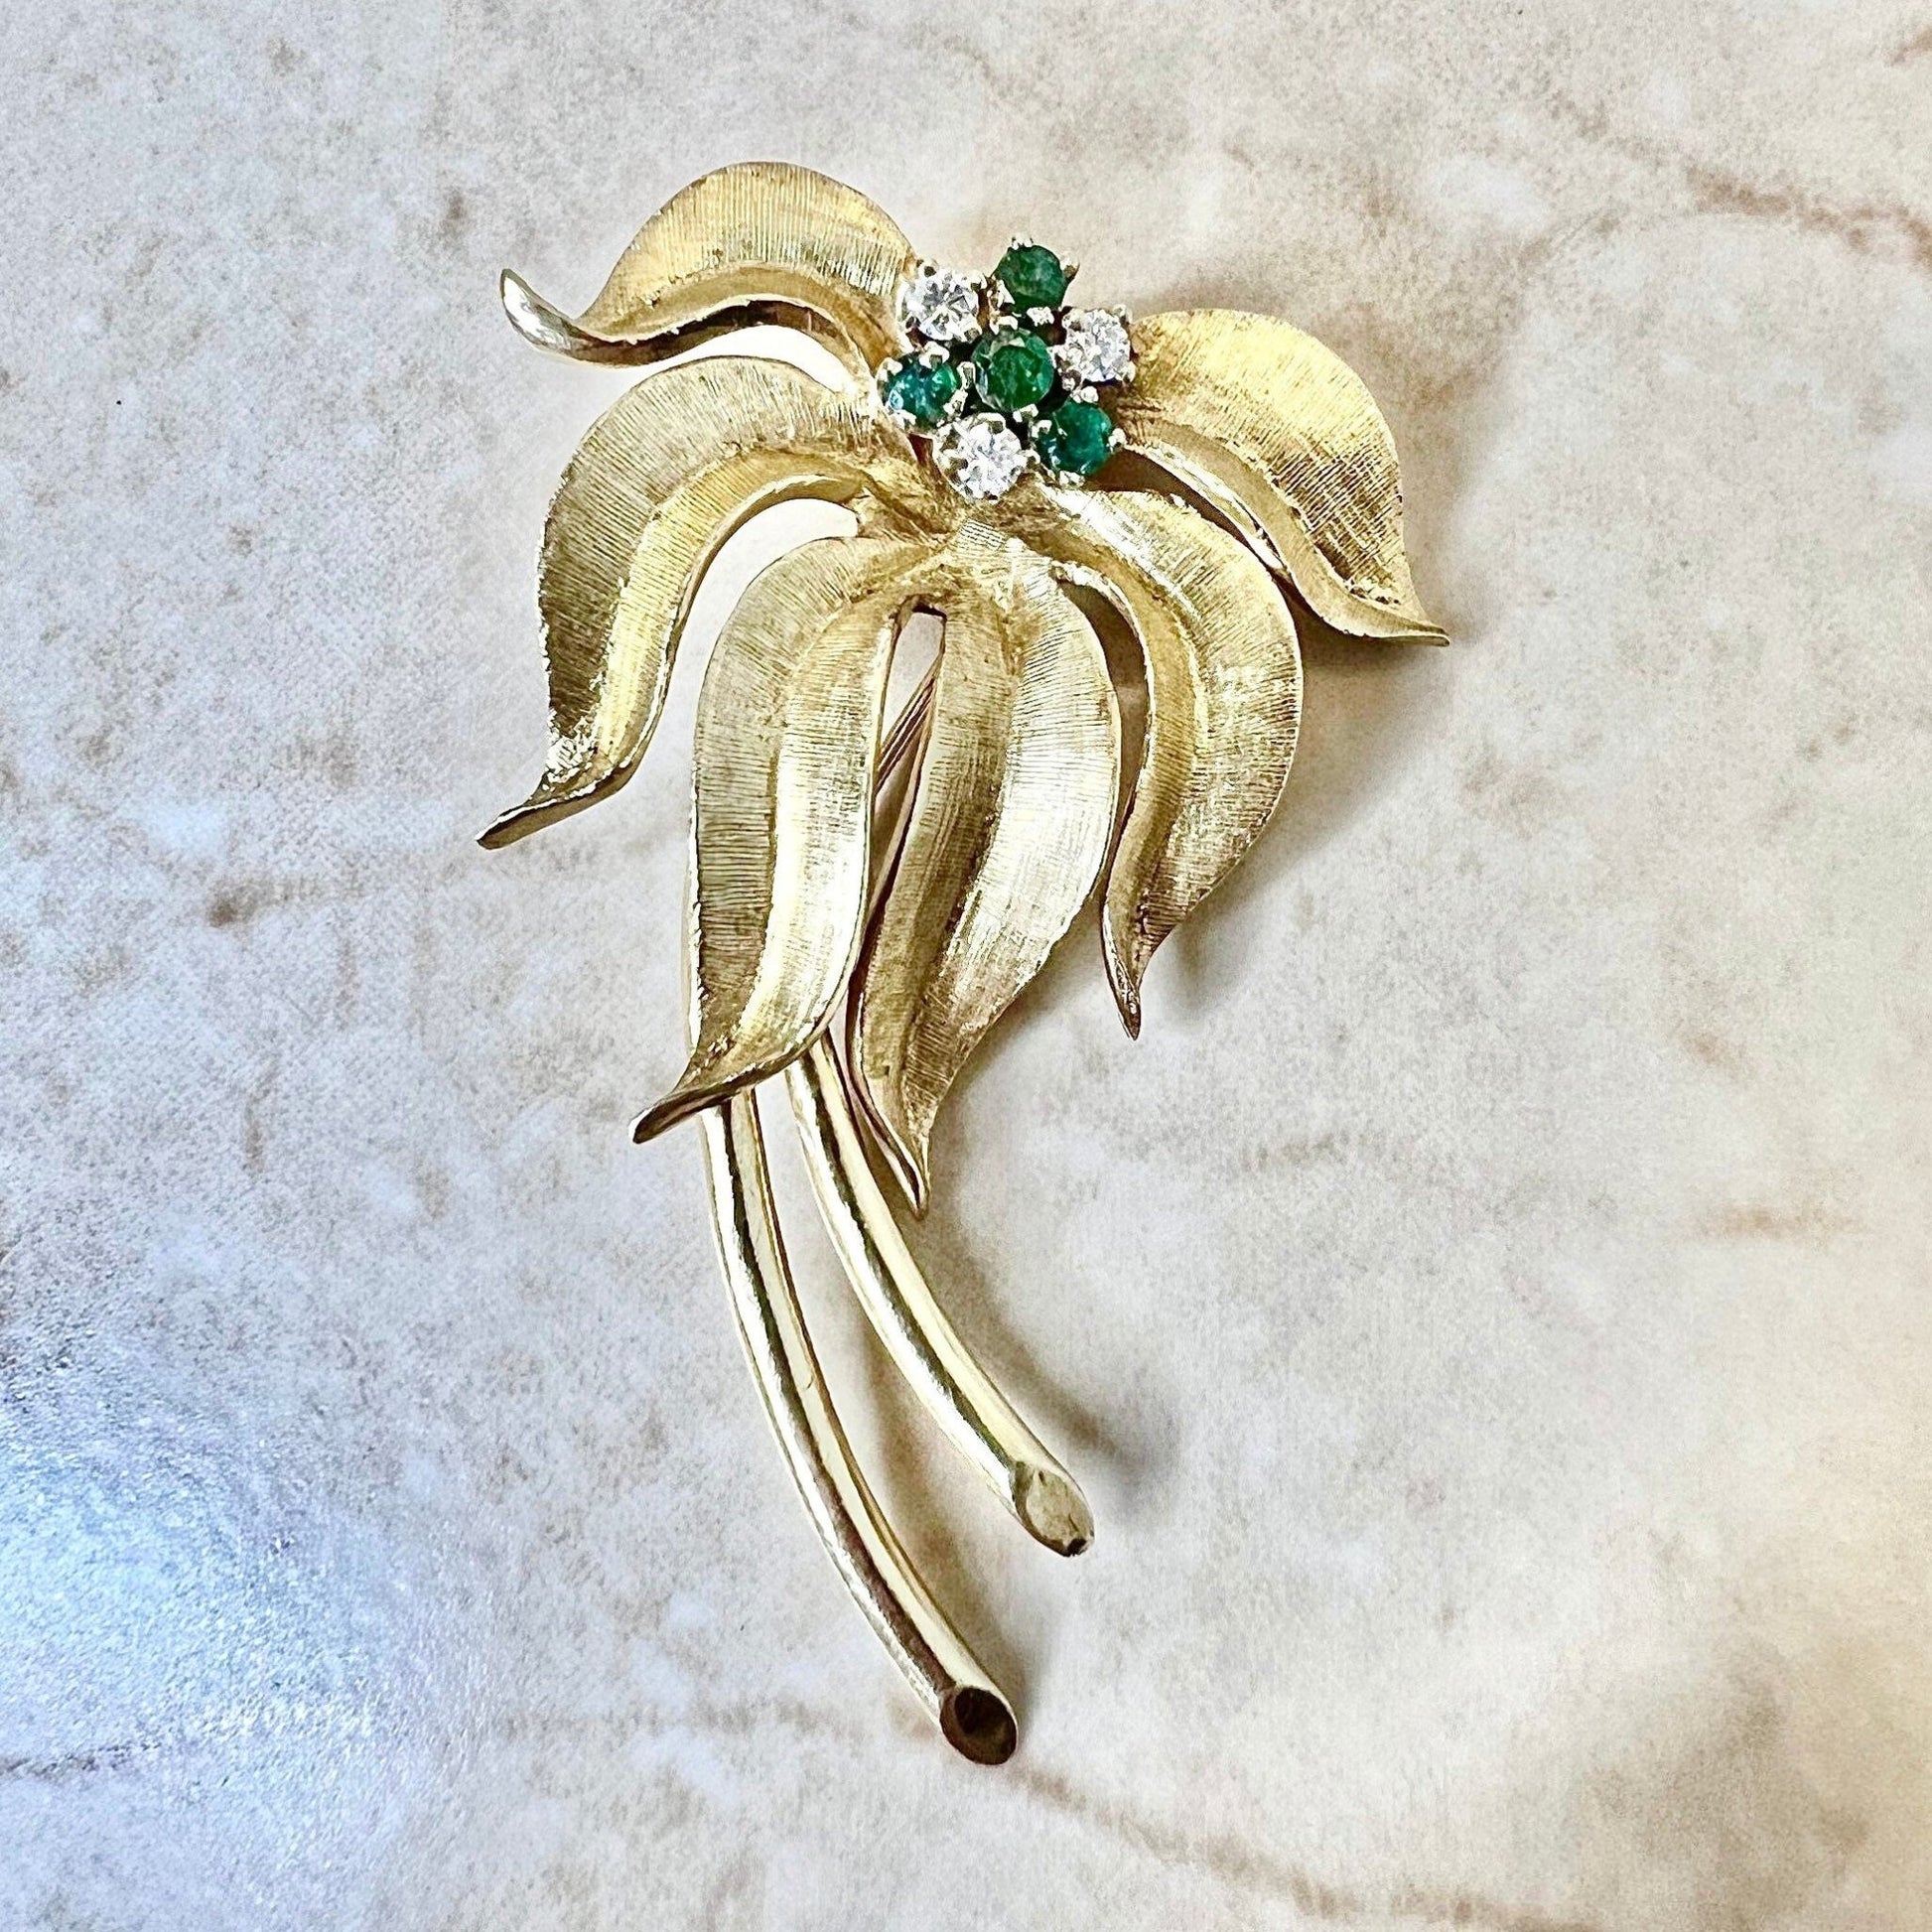 Vintage Floral Brooch Pin w/ Diamonds 14K Gold